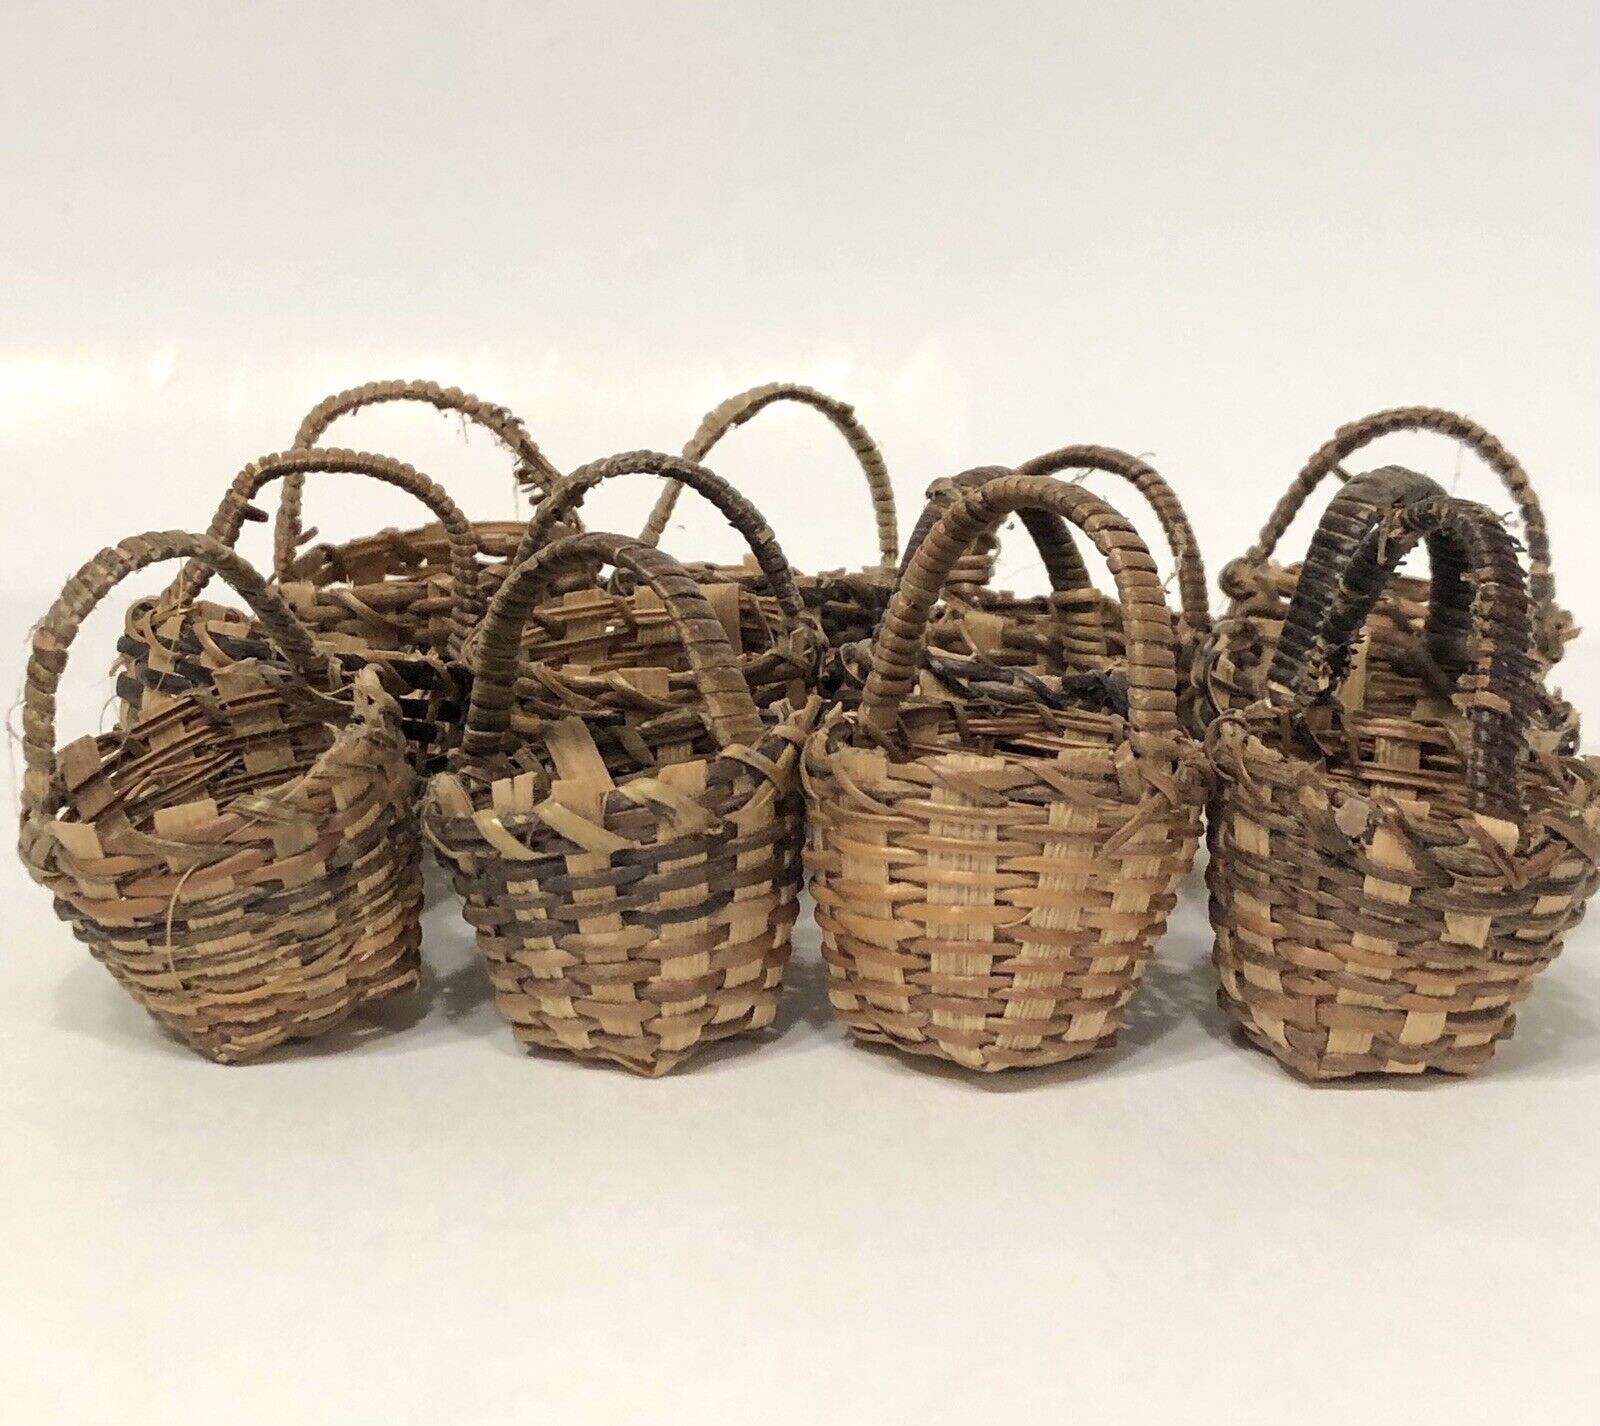 Lot of 12 Miniature Basket Straw Wicker Woven w/ Handles Dollhouse Crafts Decor